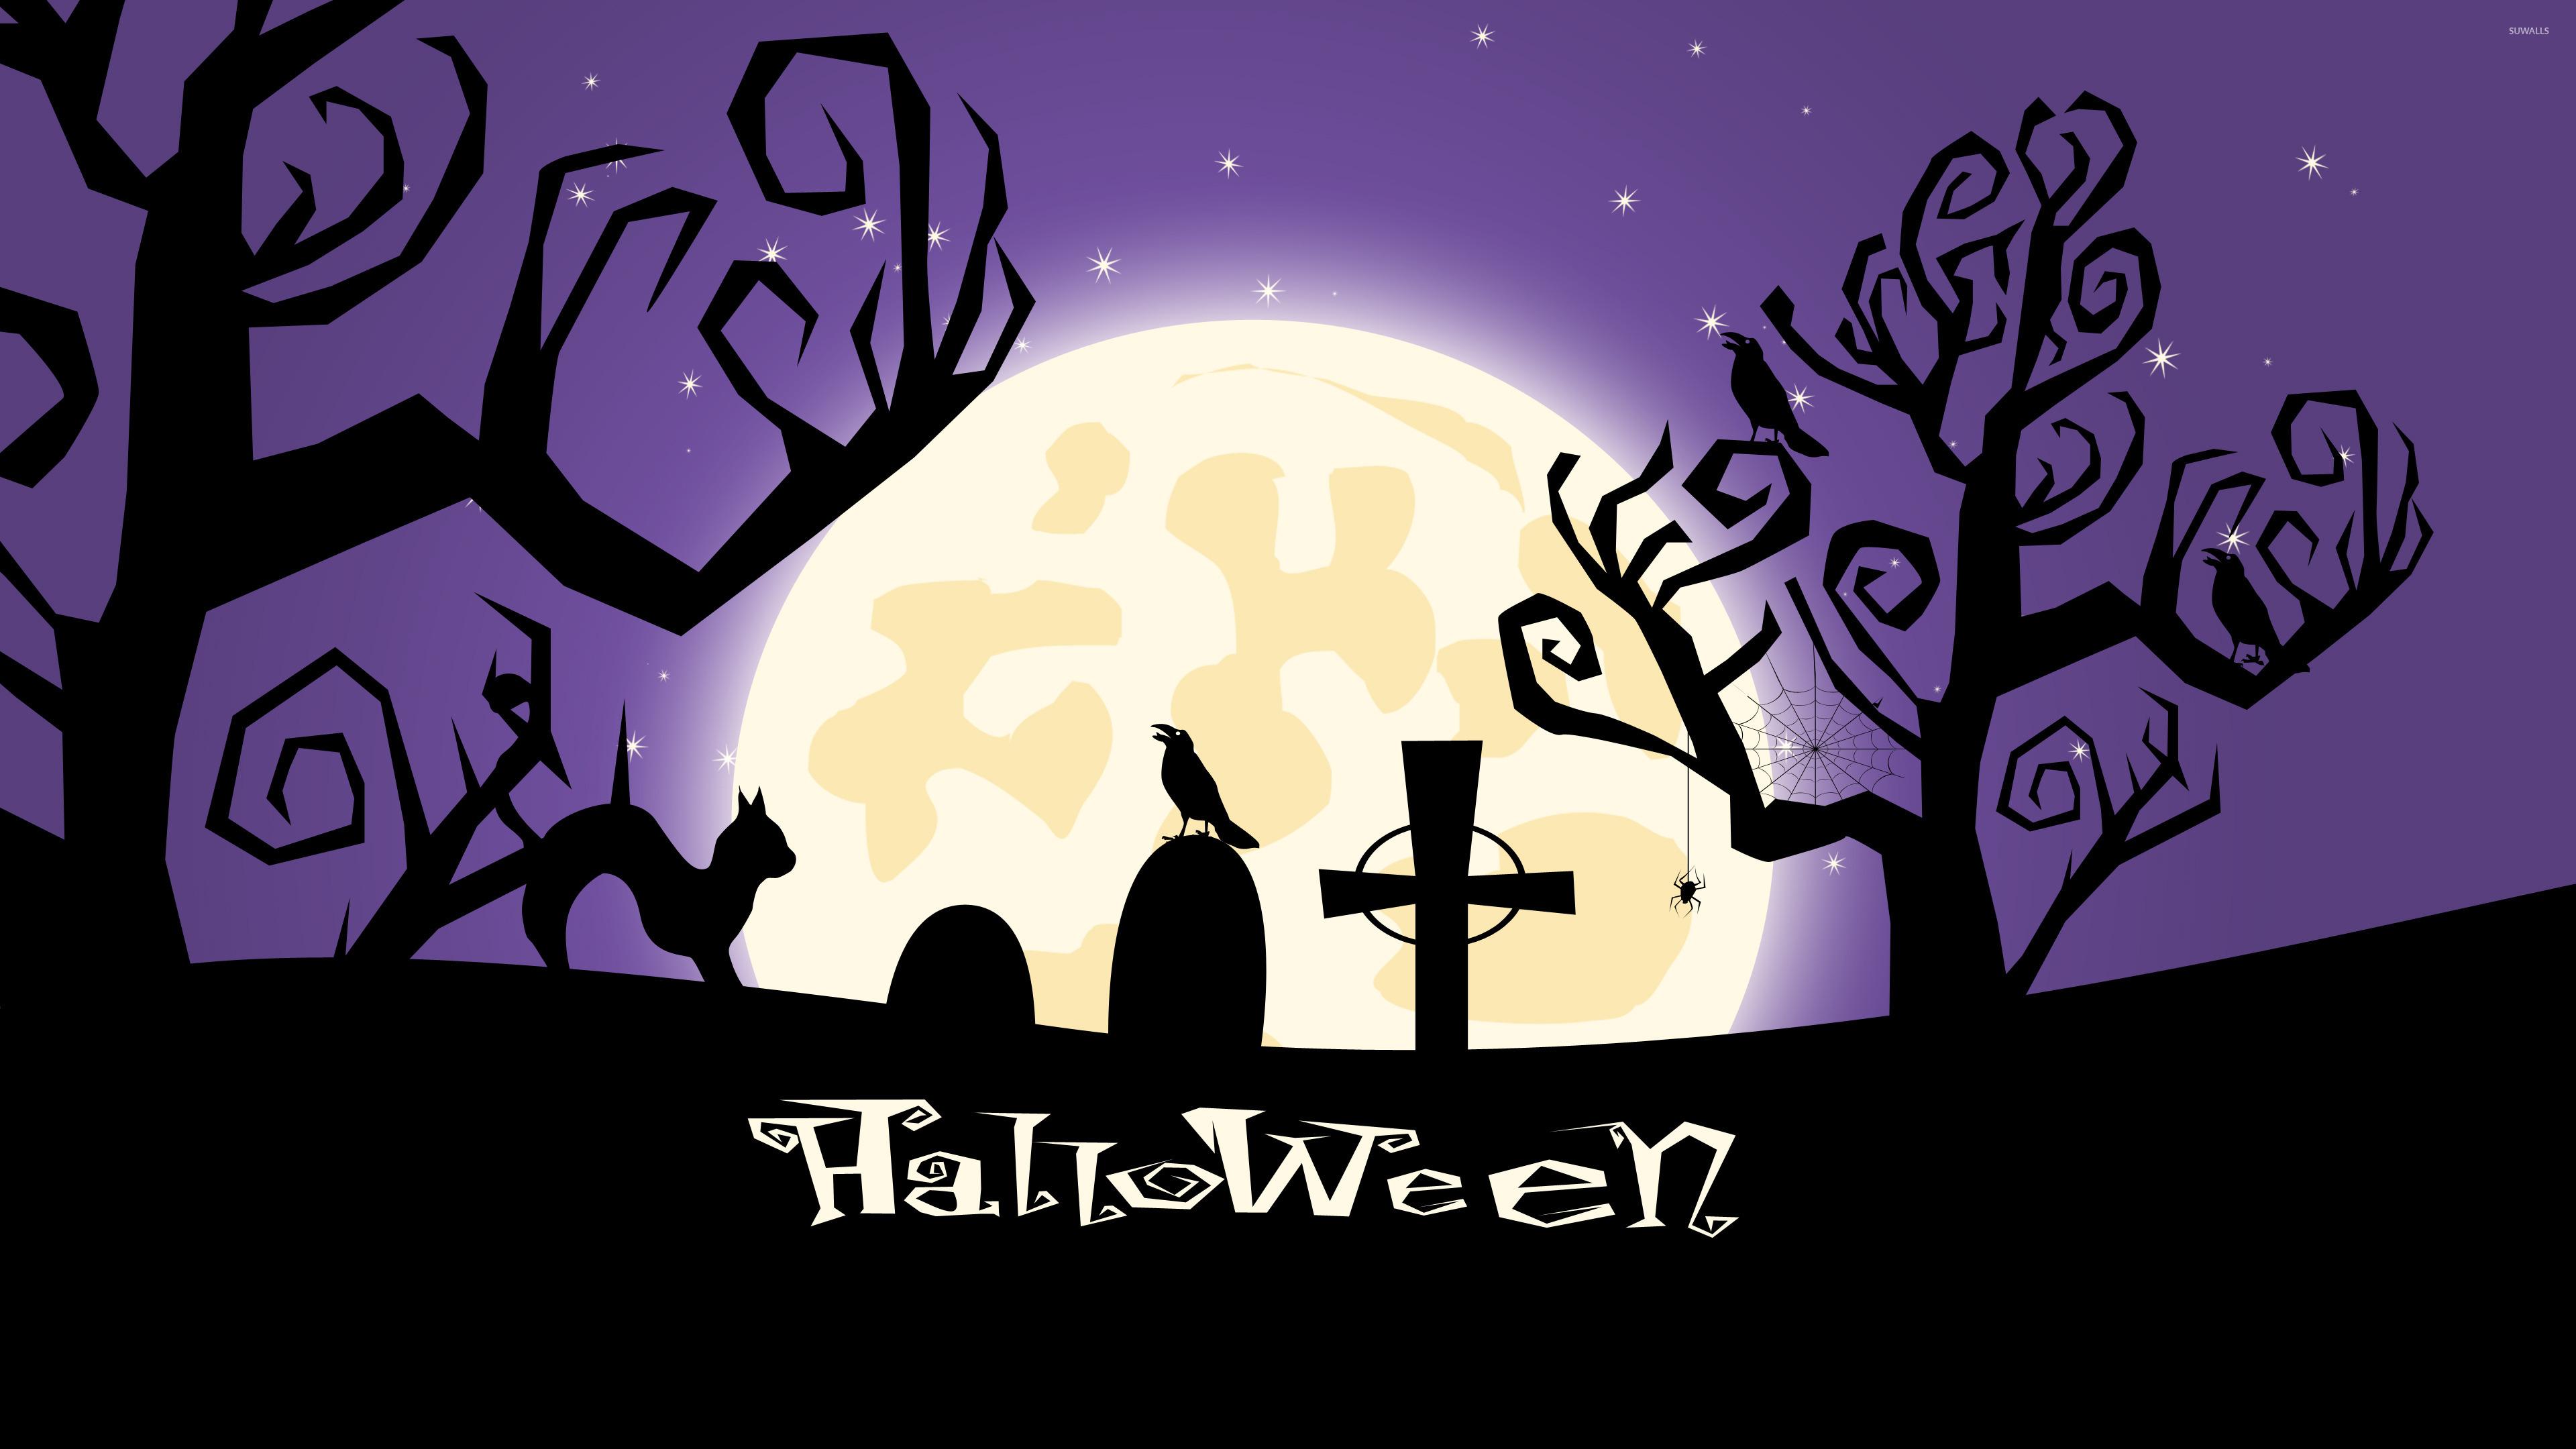 Halloween night in the graveyard wallpaper